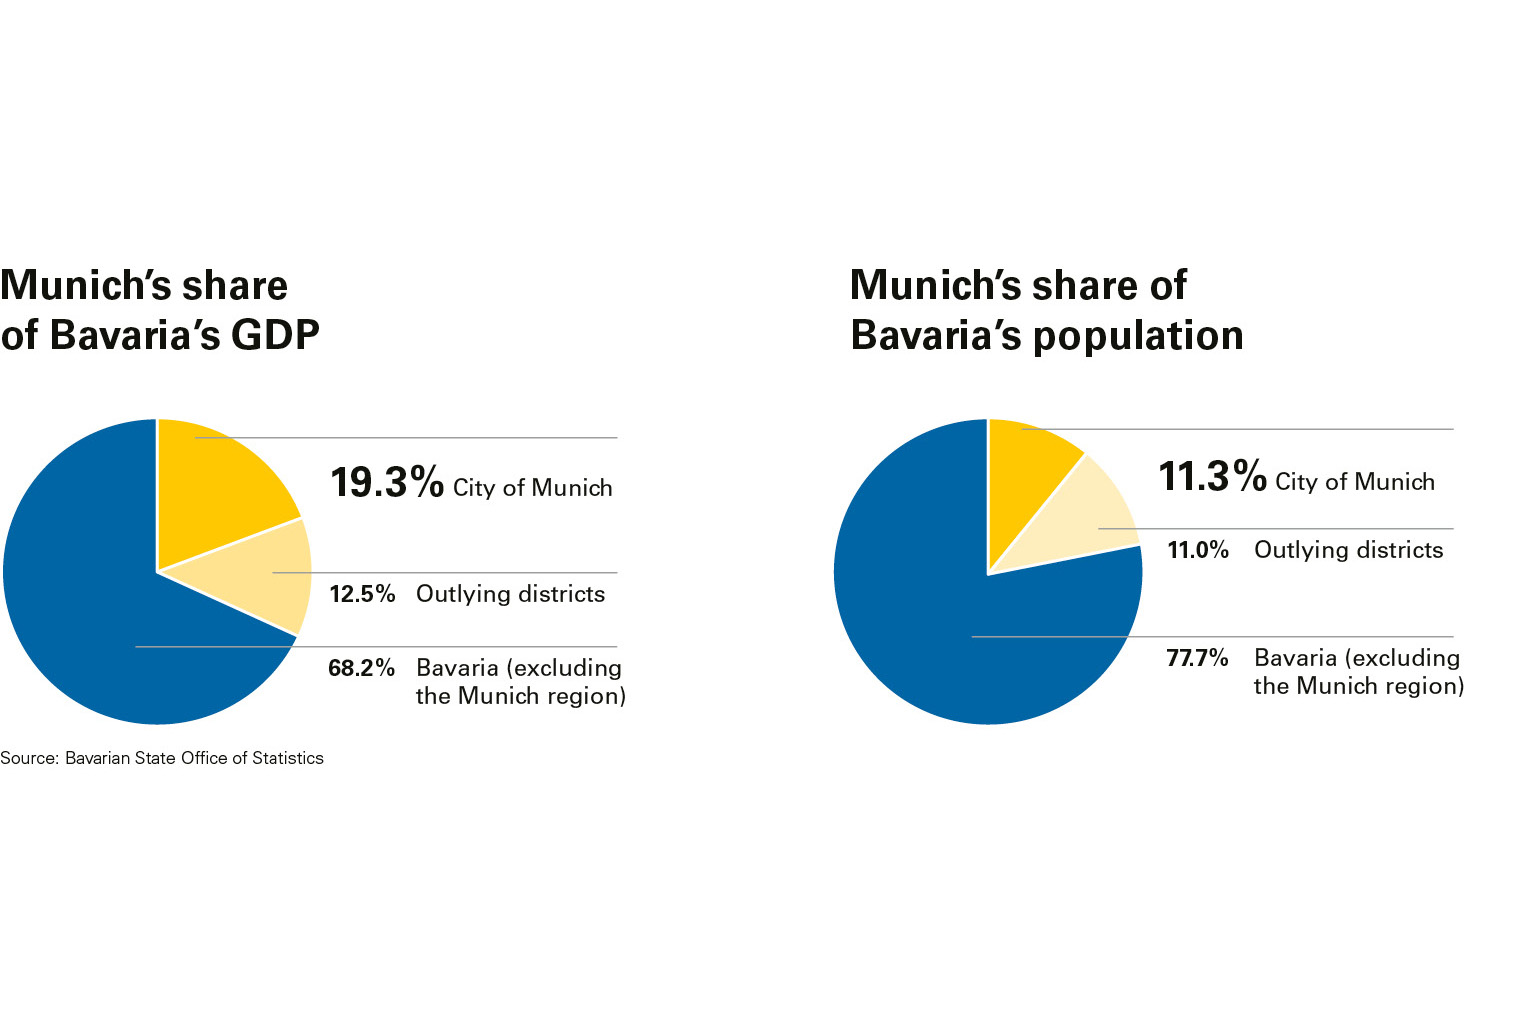 Munich's share of Bavaria's GDP